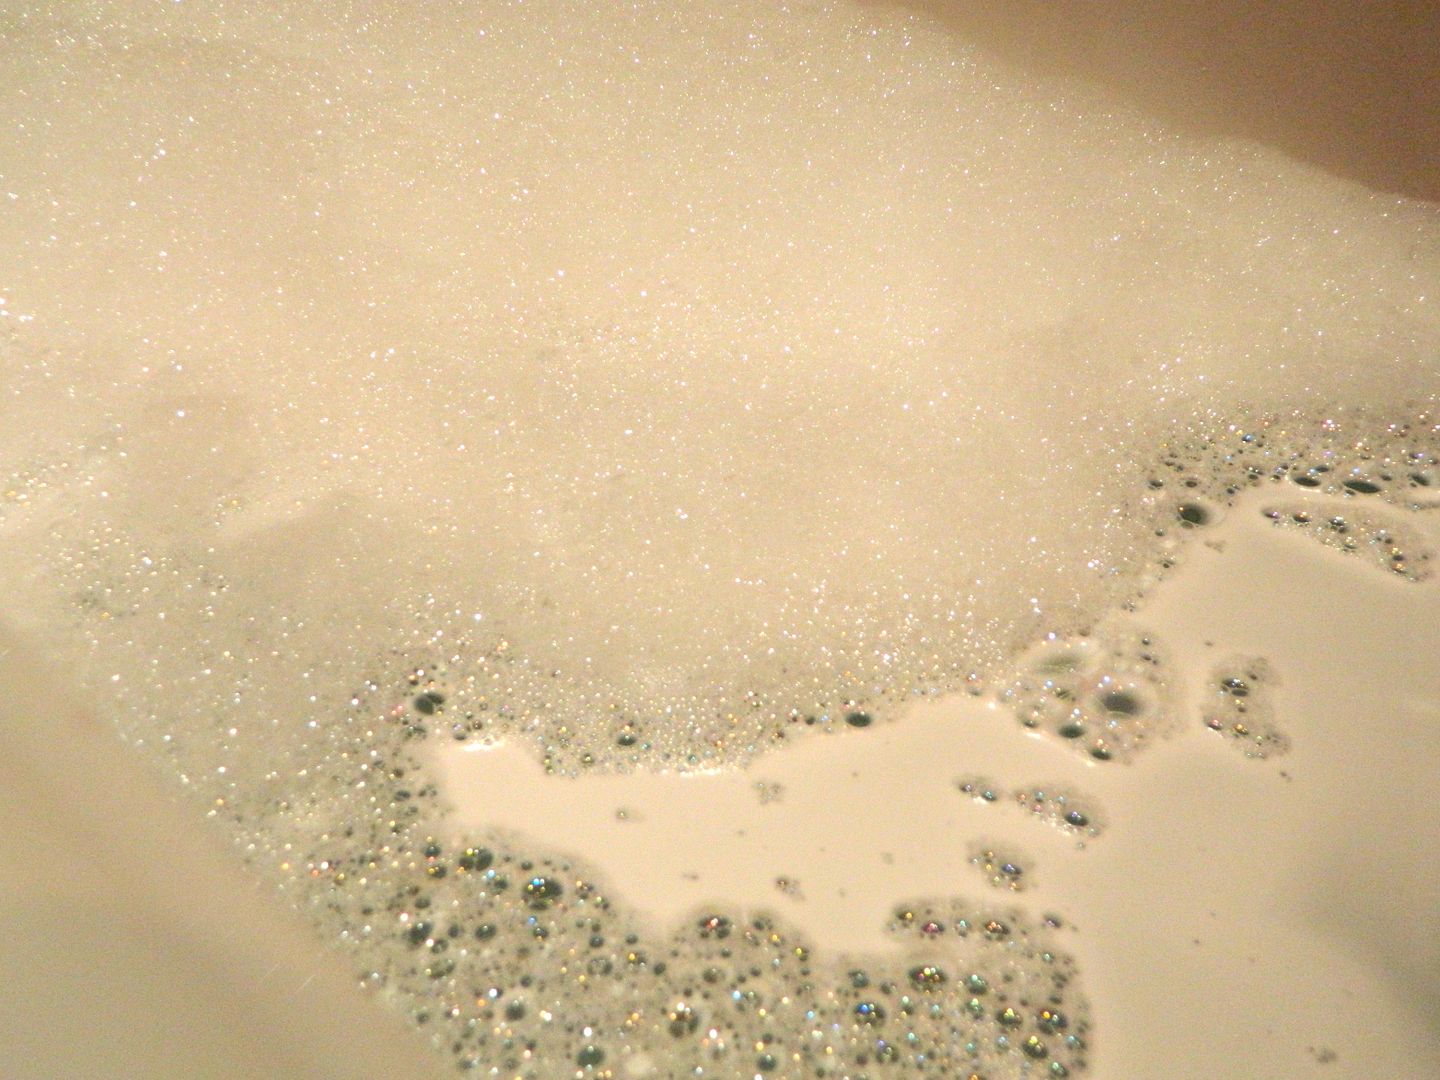 Lush Bubble Beard Bubble Bar Bath Results Review Belle-amie